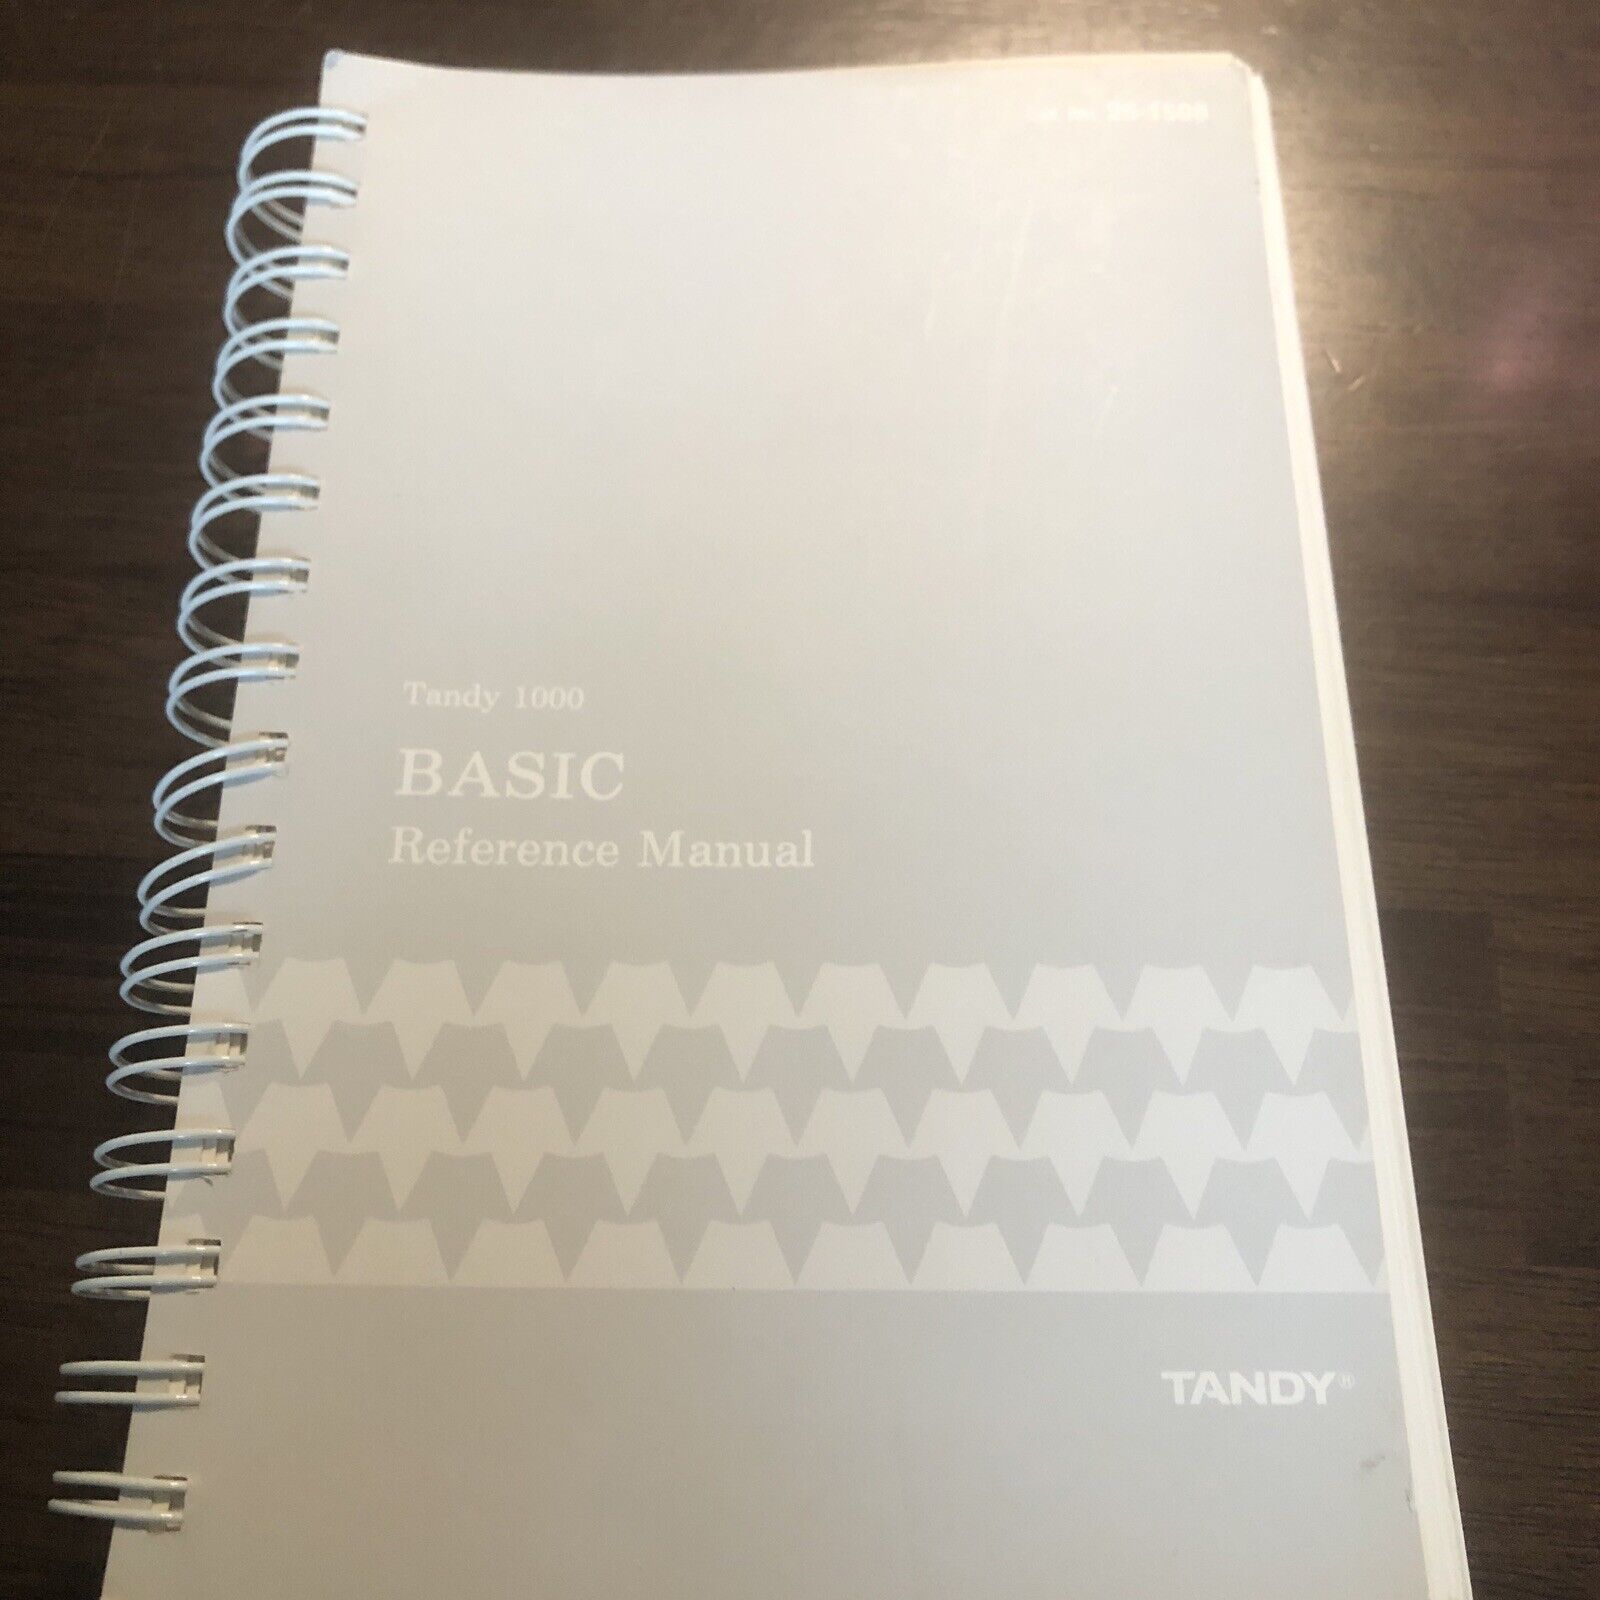 Basic References Manual Tandy 1000